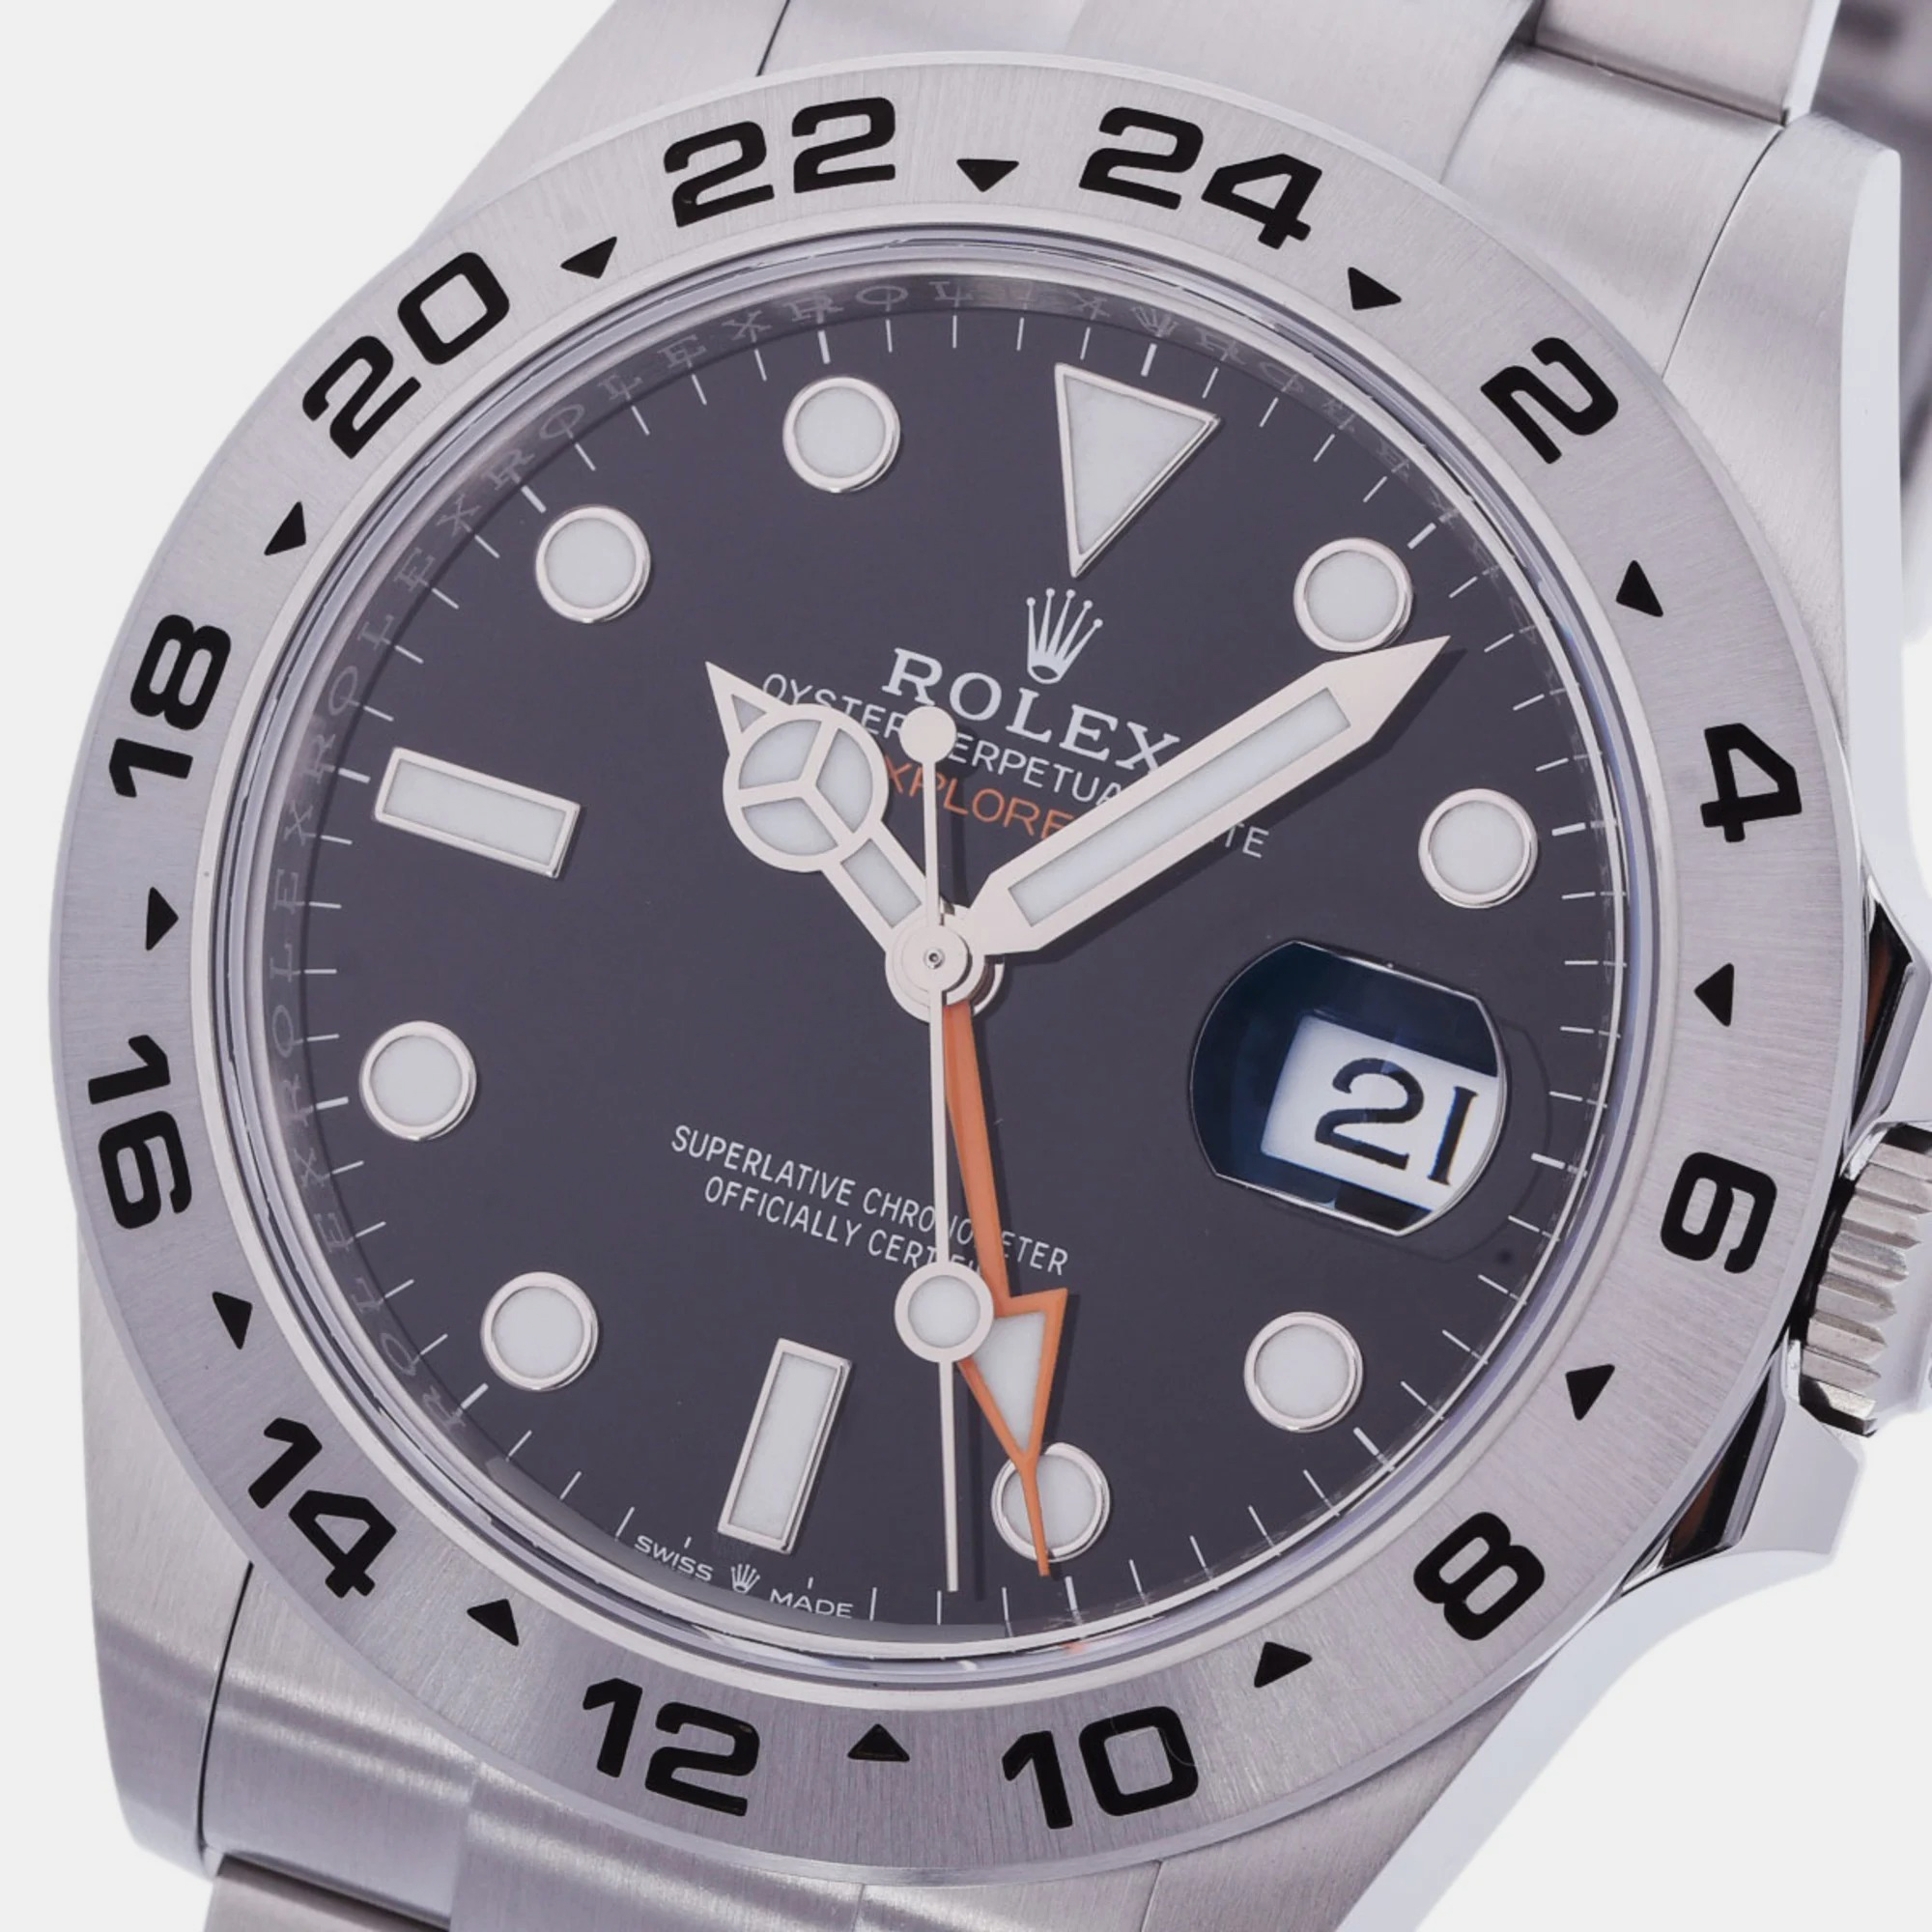 

Rolex Black Stainless Steel Explorer II 226570 Automatic Men's Wristwatch 42 mm